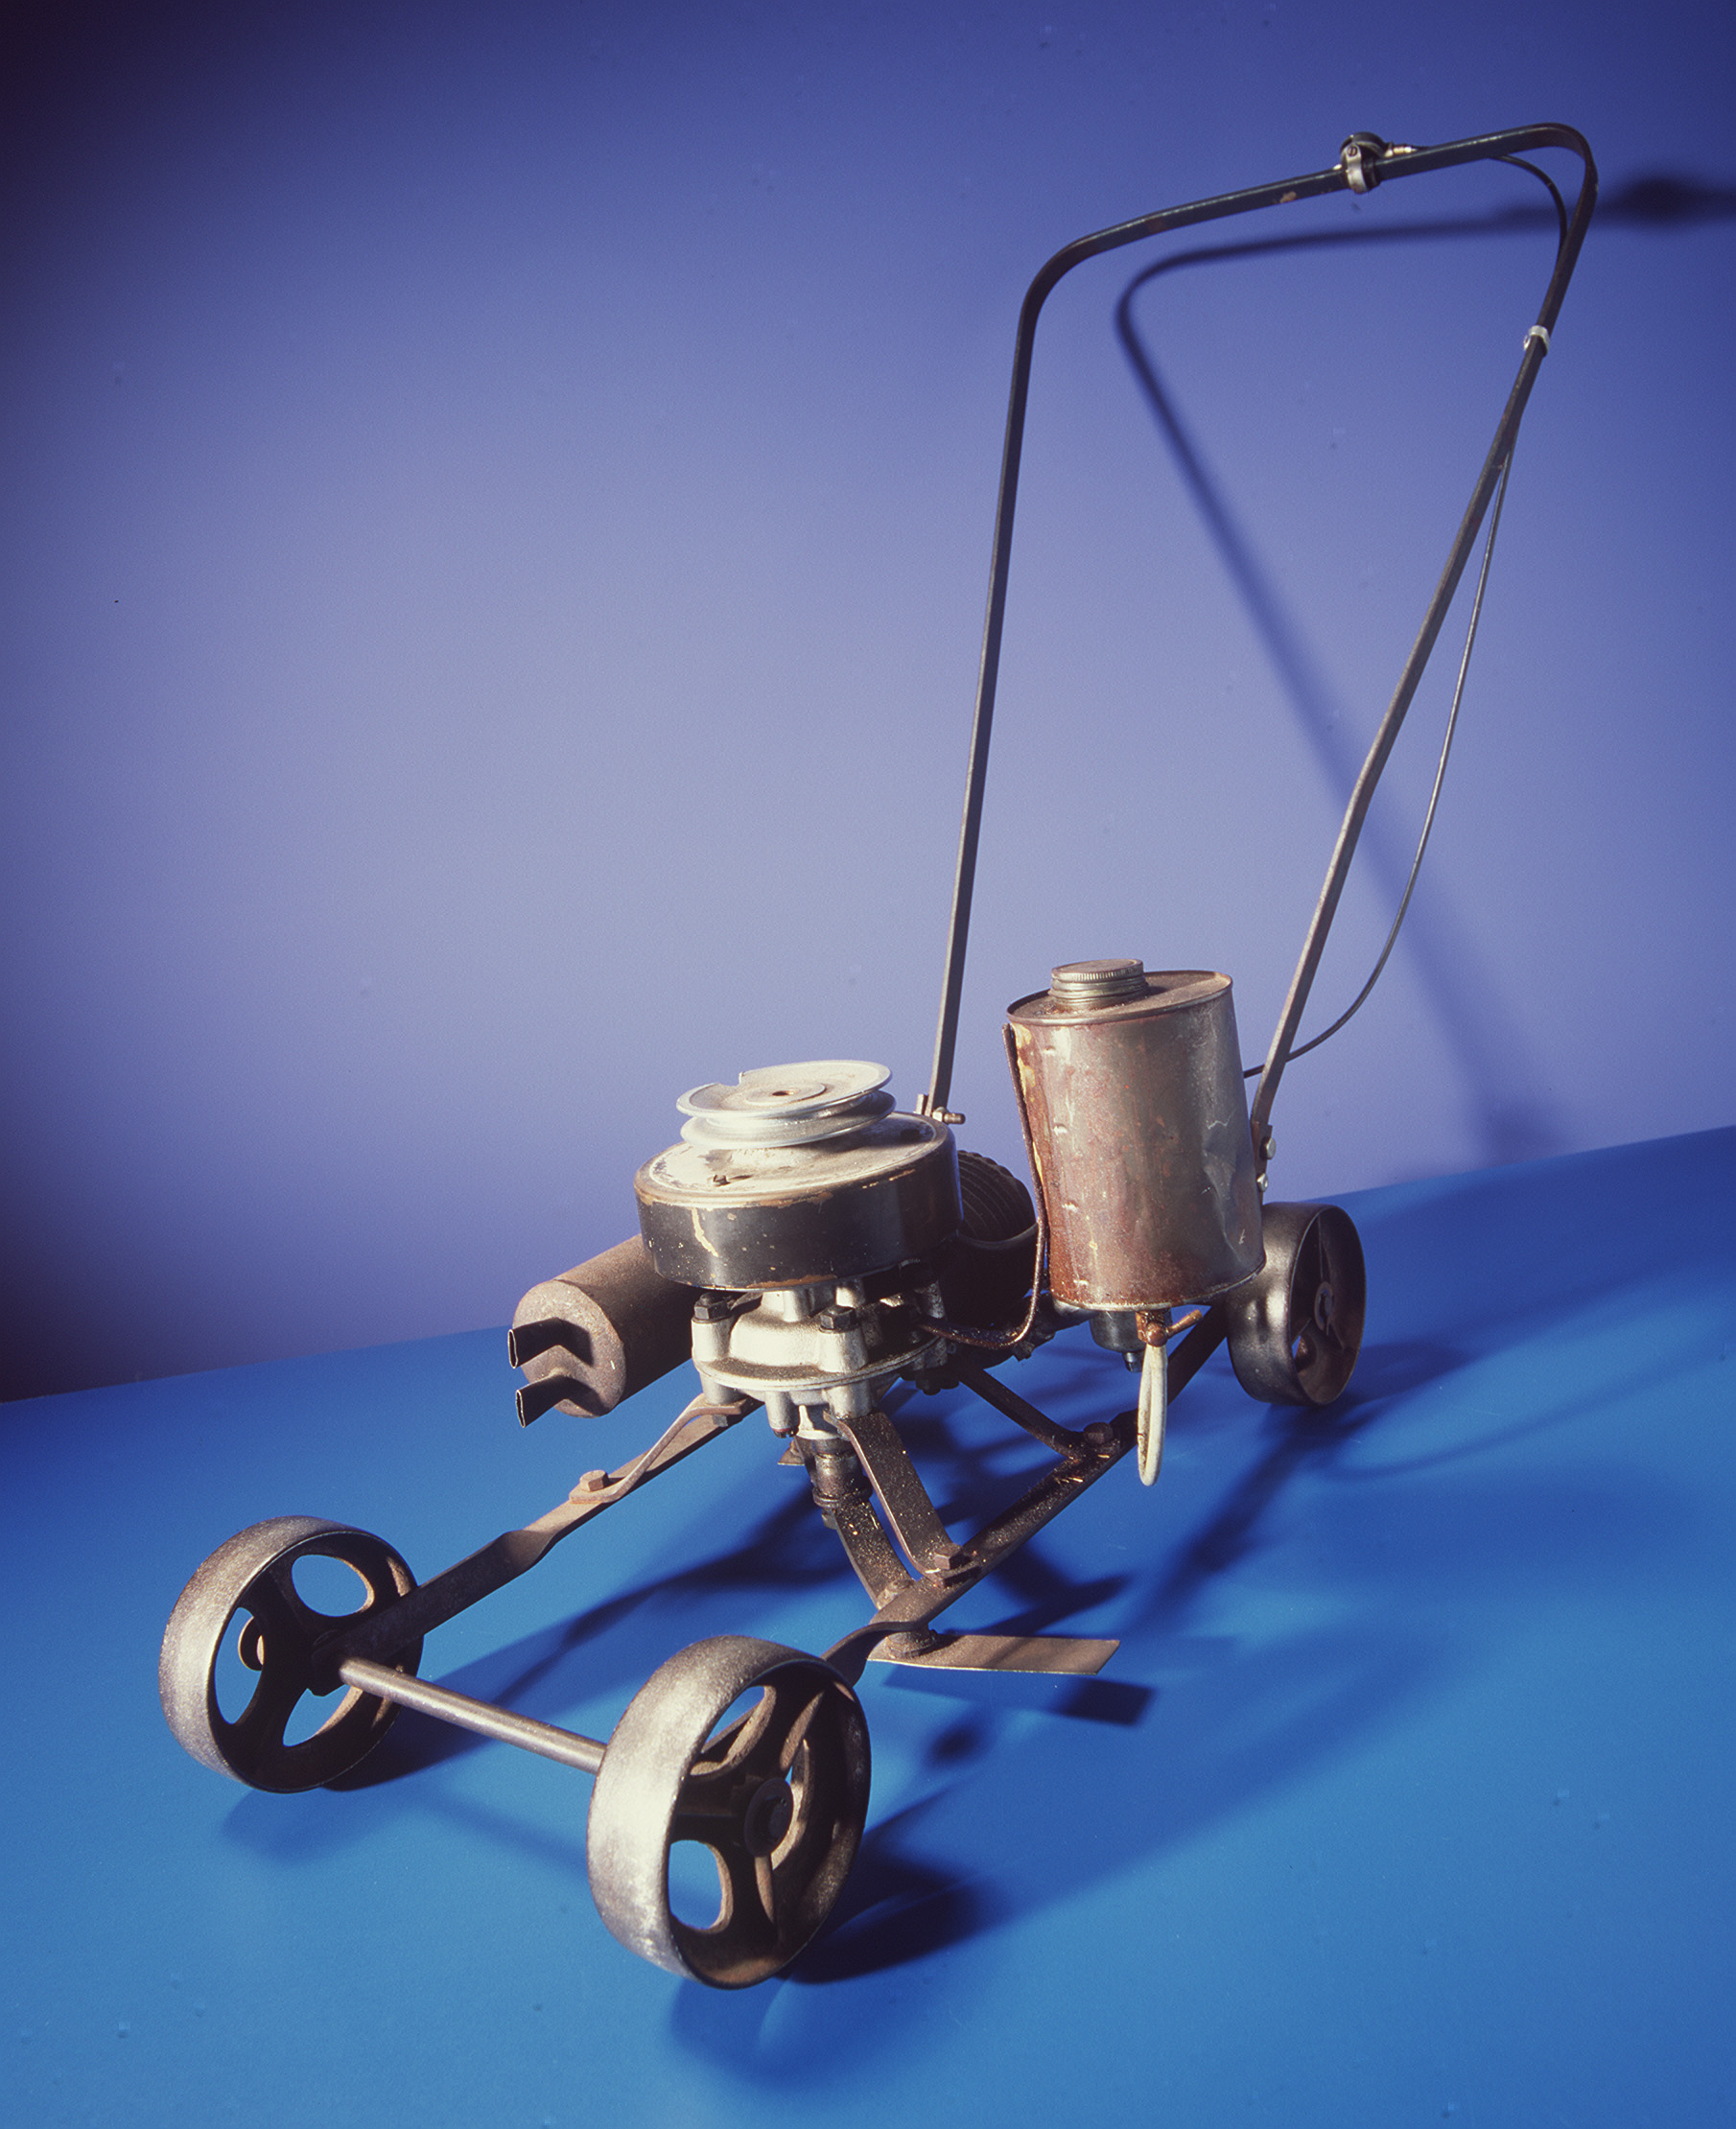 Victa 'peach tin' prototype rotary lawn mower